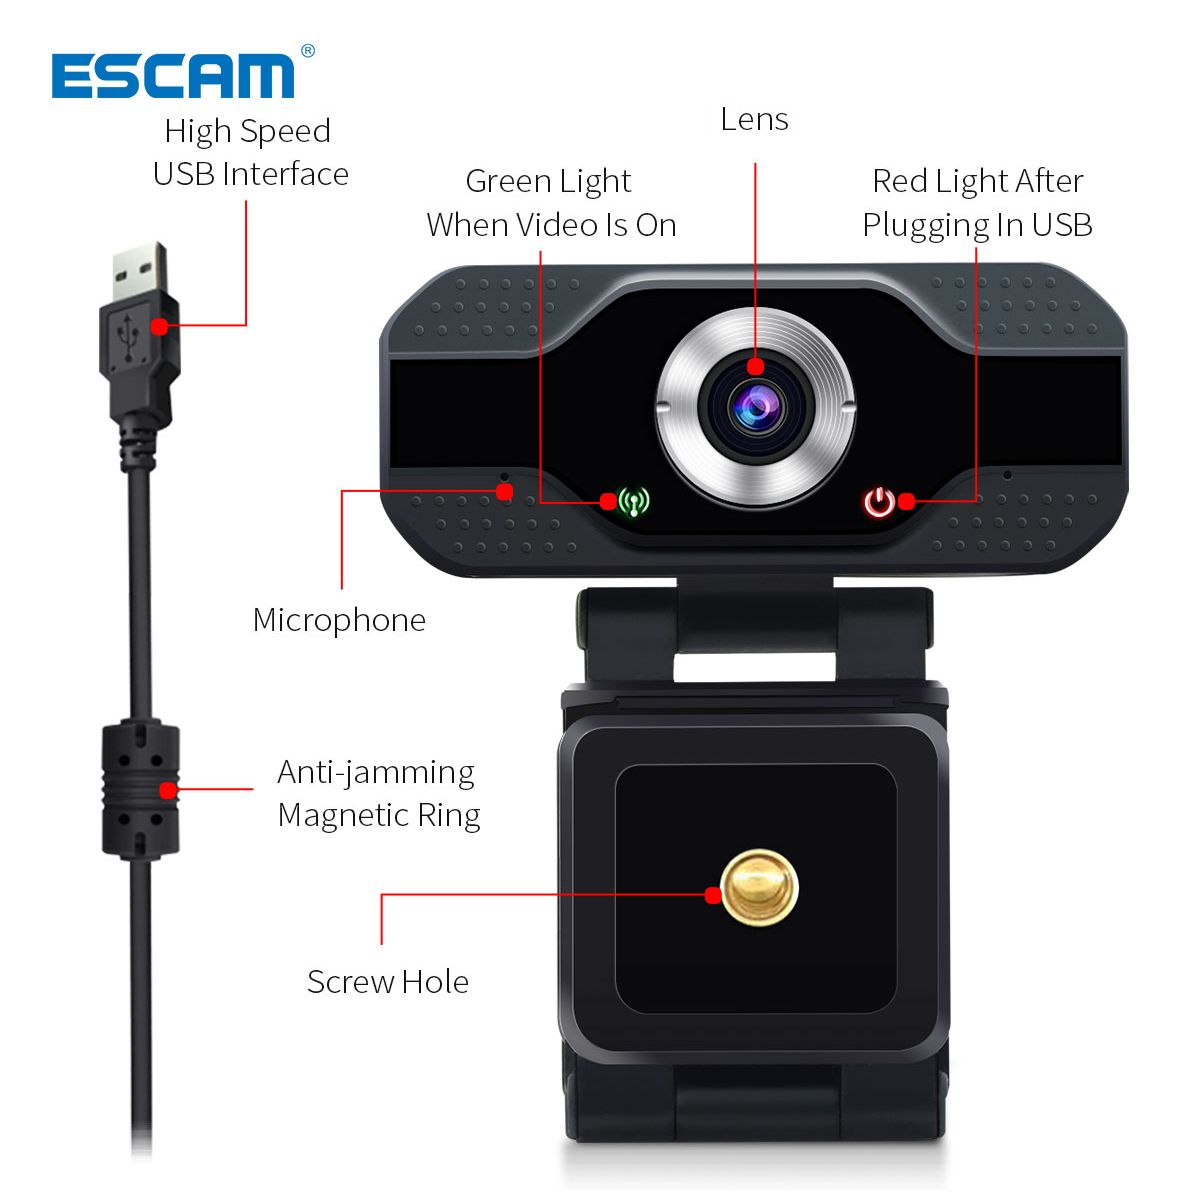 ESCAM-PVR006-1080P-HD2MP-H264-Portable-Mini-Webcam-Convenient-Live-Broadcast-PC-Camera-with-Micropho-1669405